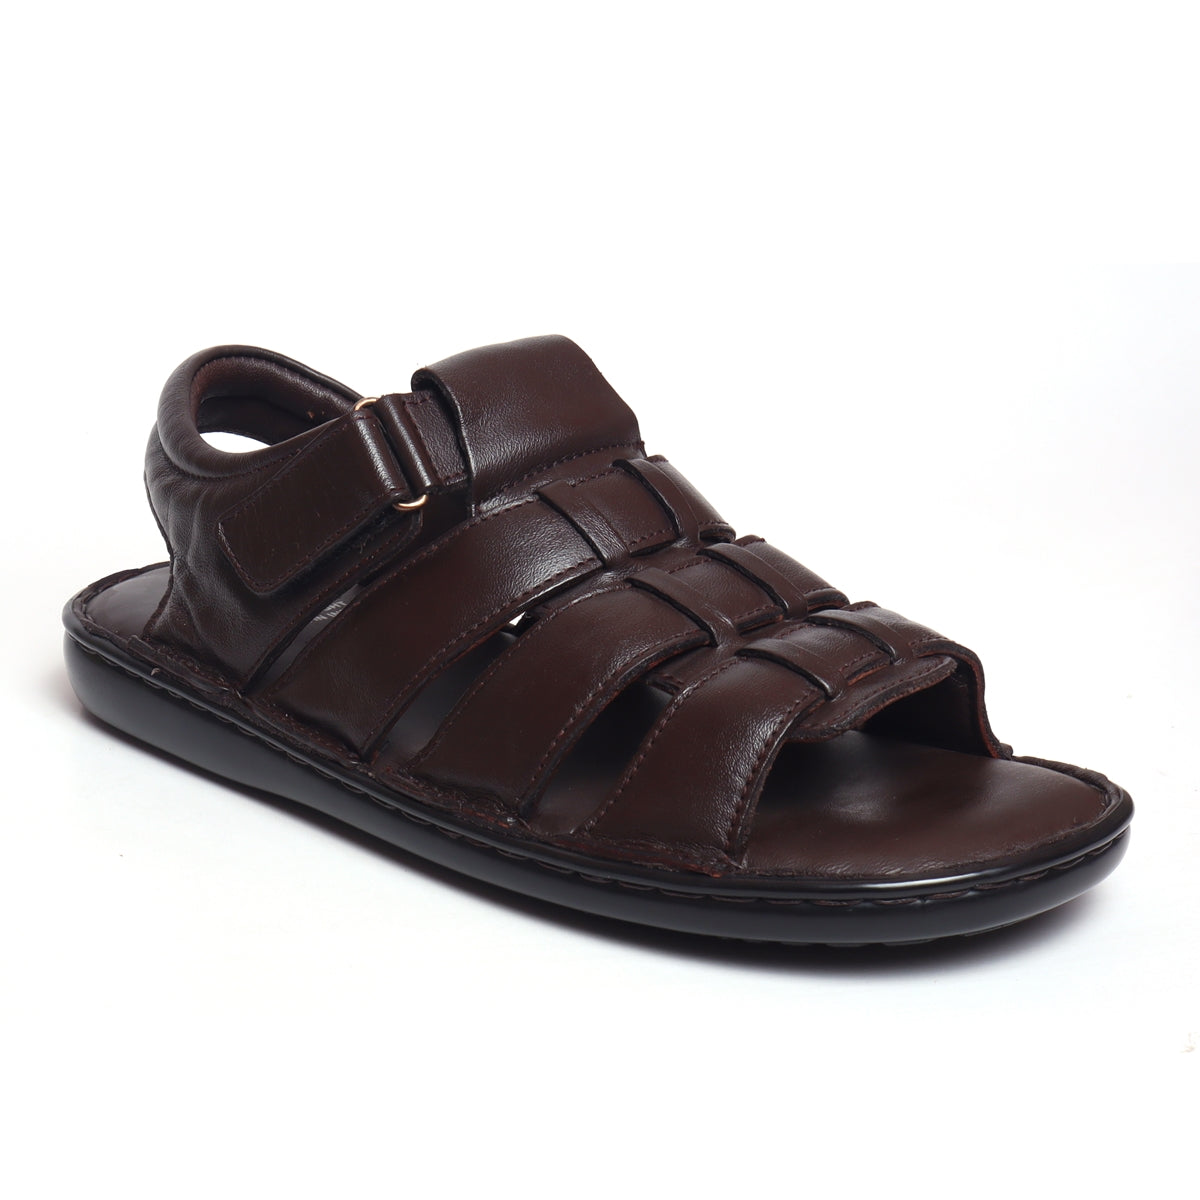 black leather sandals for men_ZS4